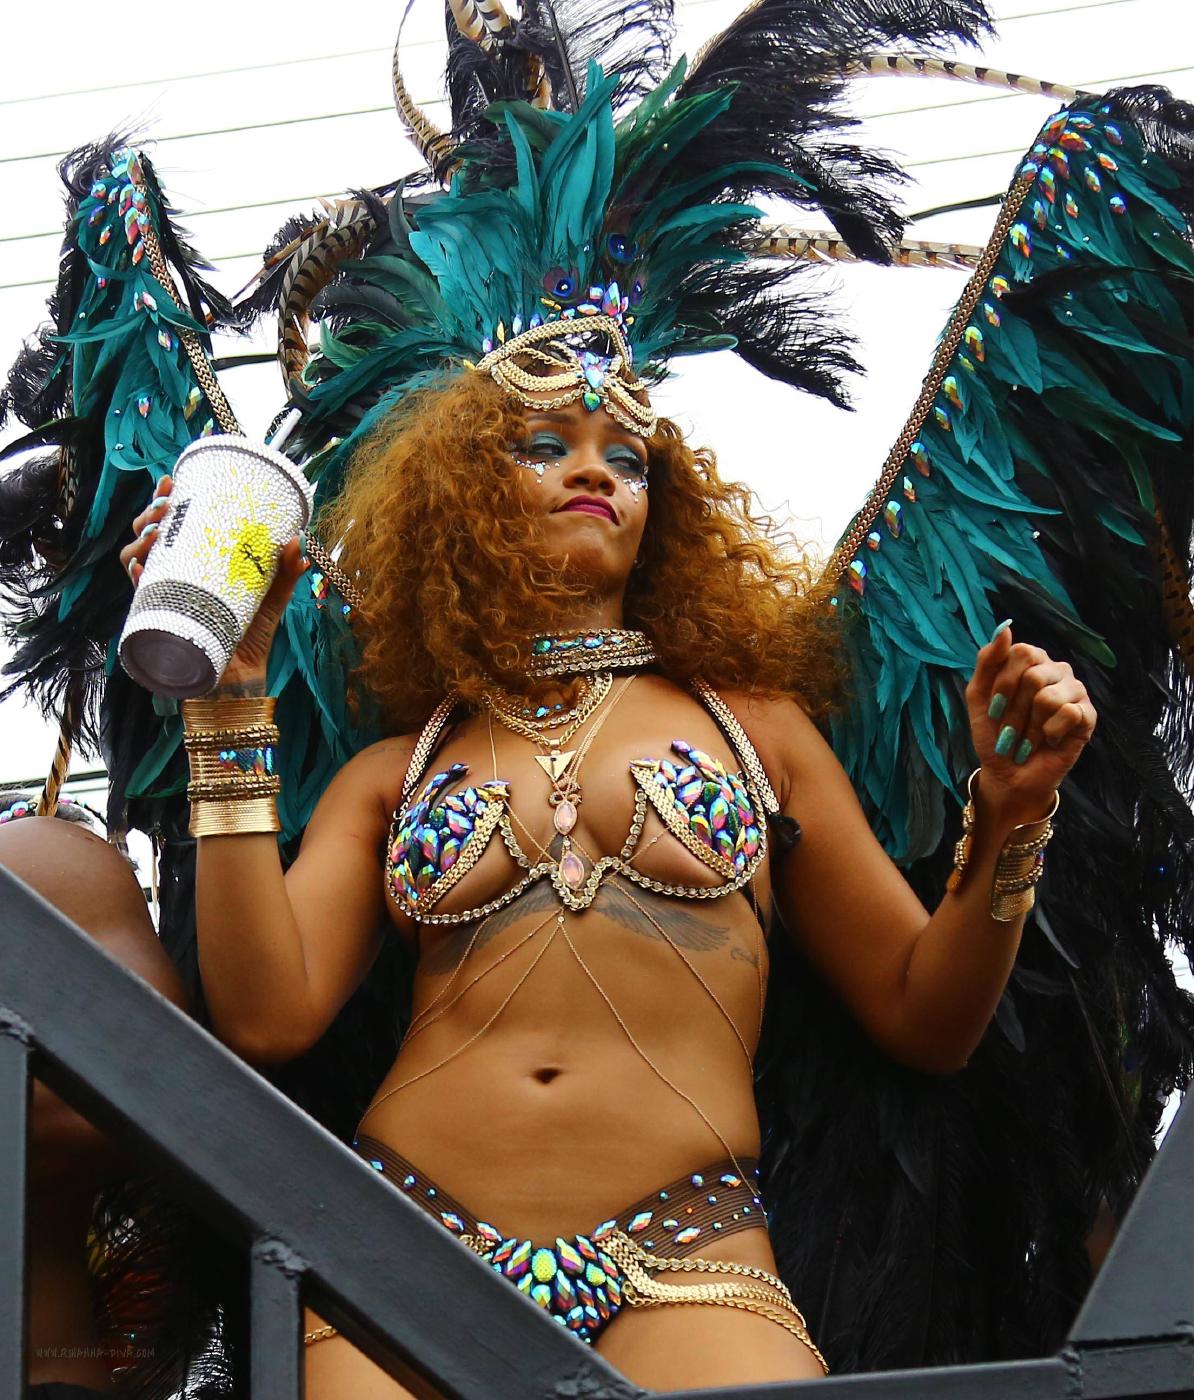 Rihanna Nip Slip Public Bikini Festival Photos Leaked 35